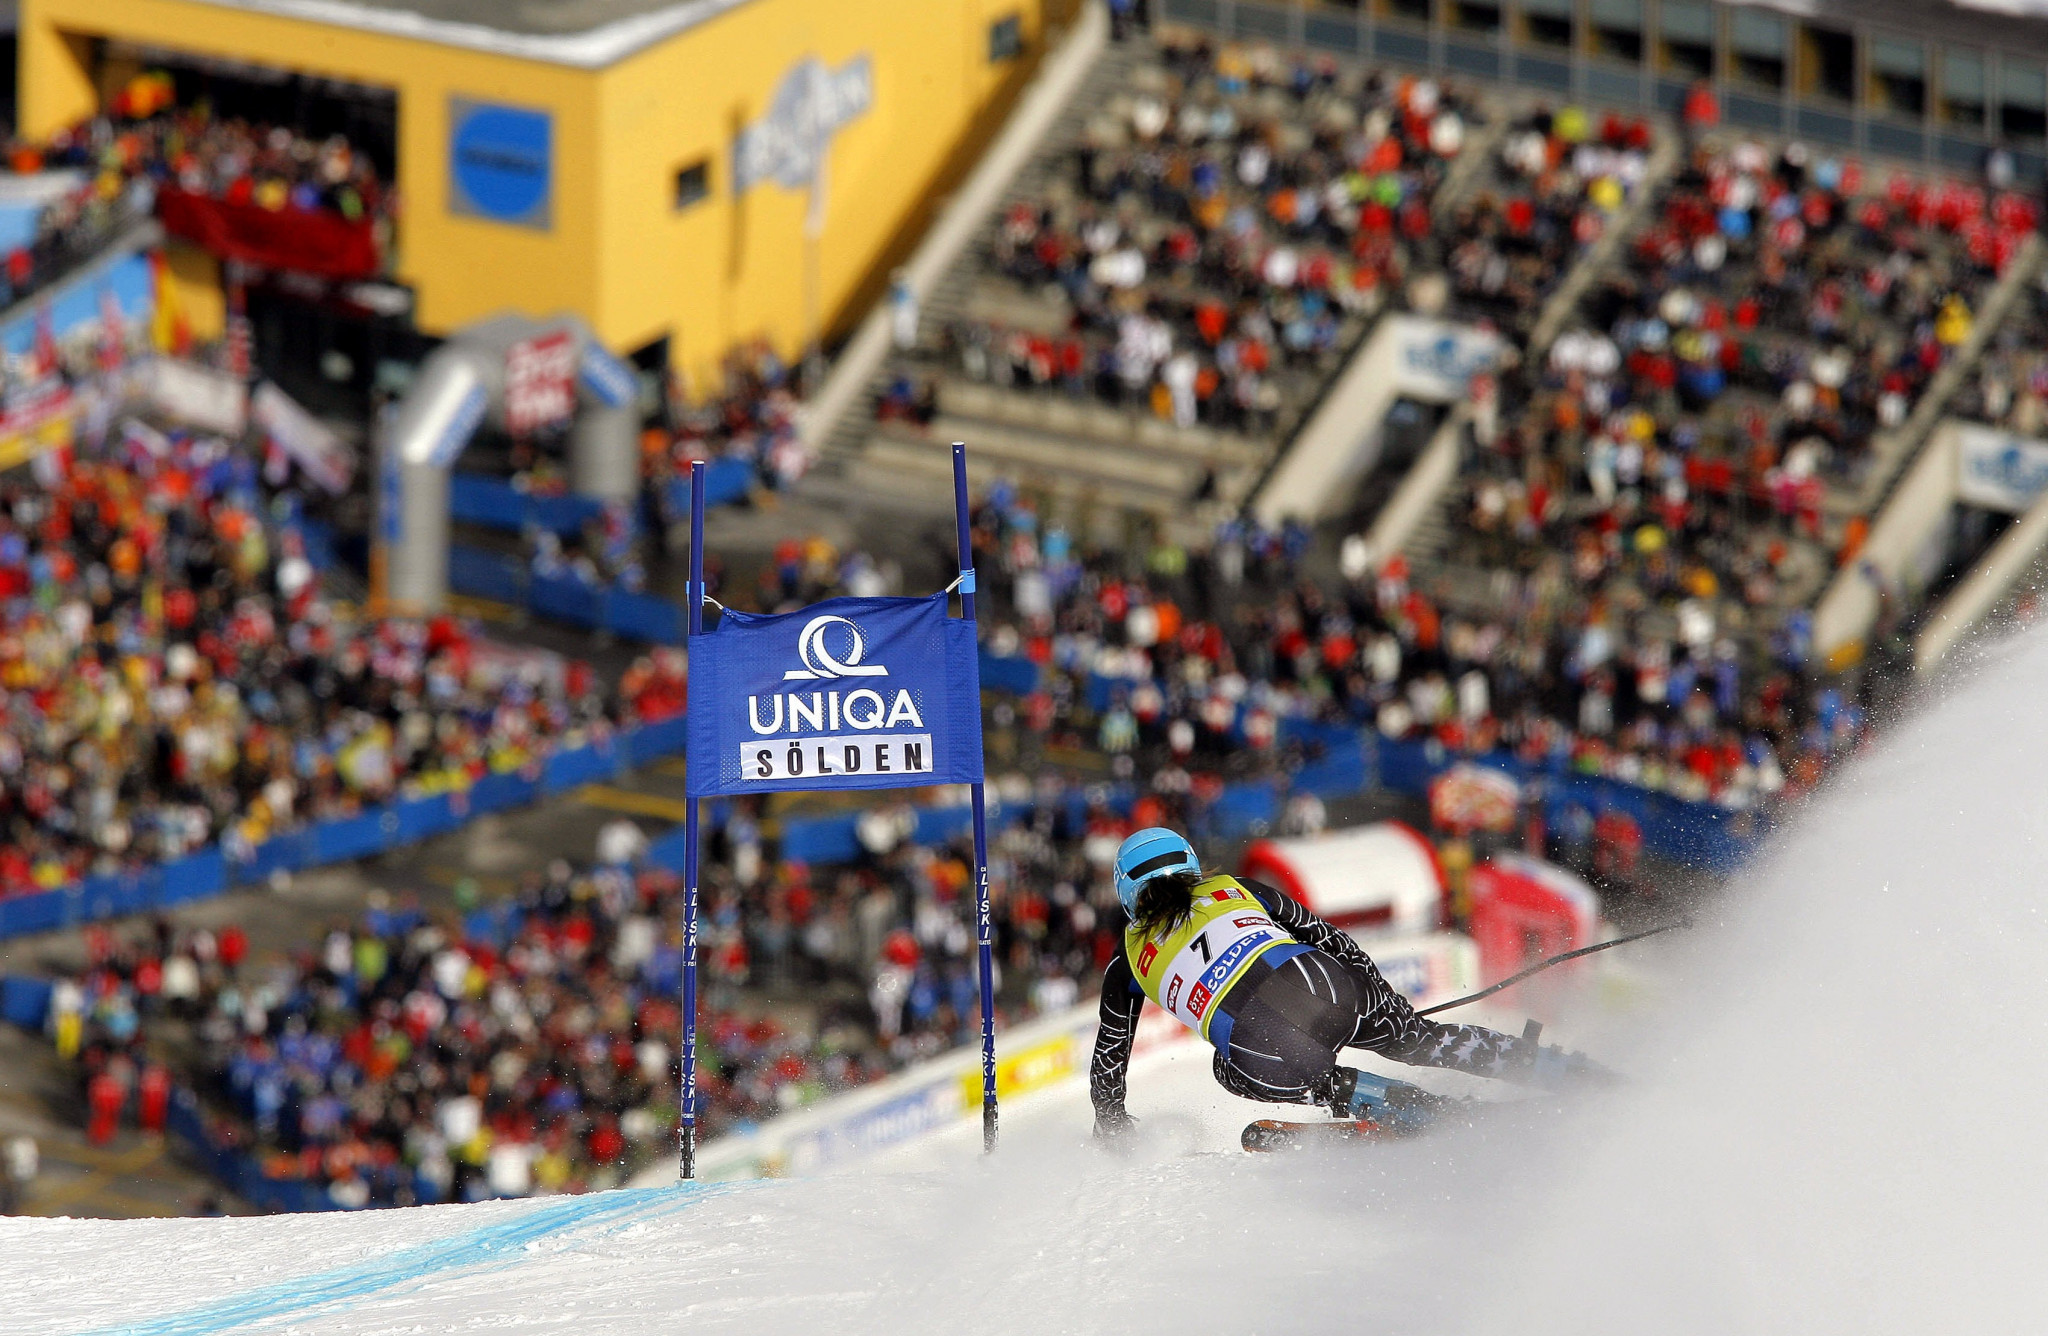 FIS Alpine Ski World Cup opener in Sölden brought forward by a week